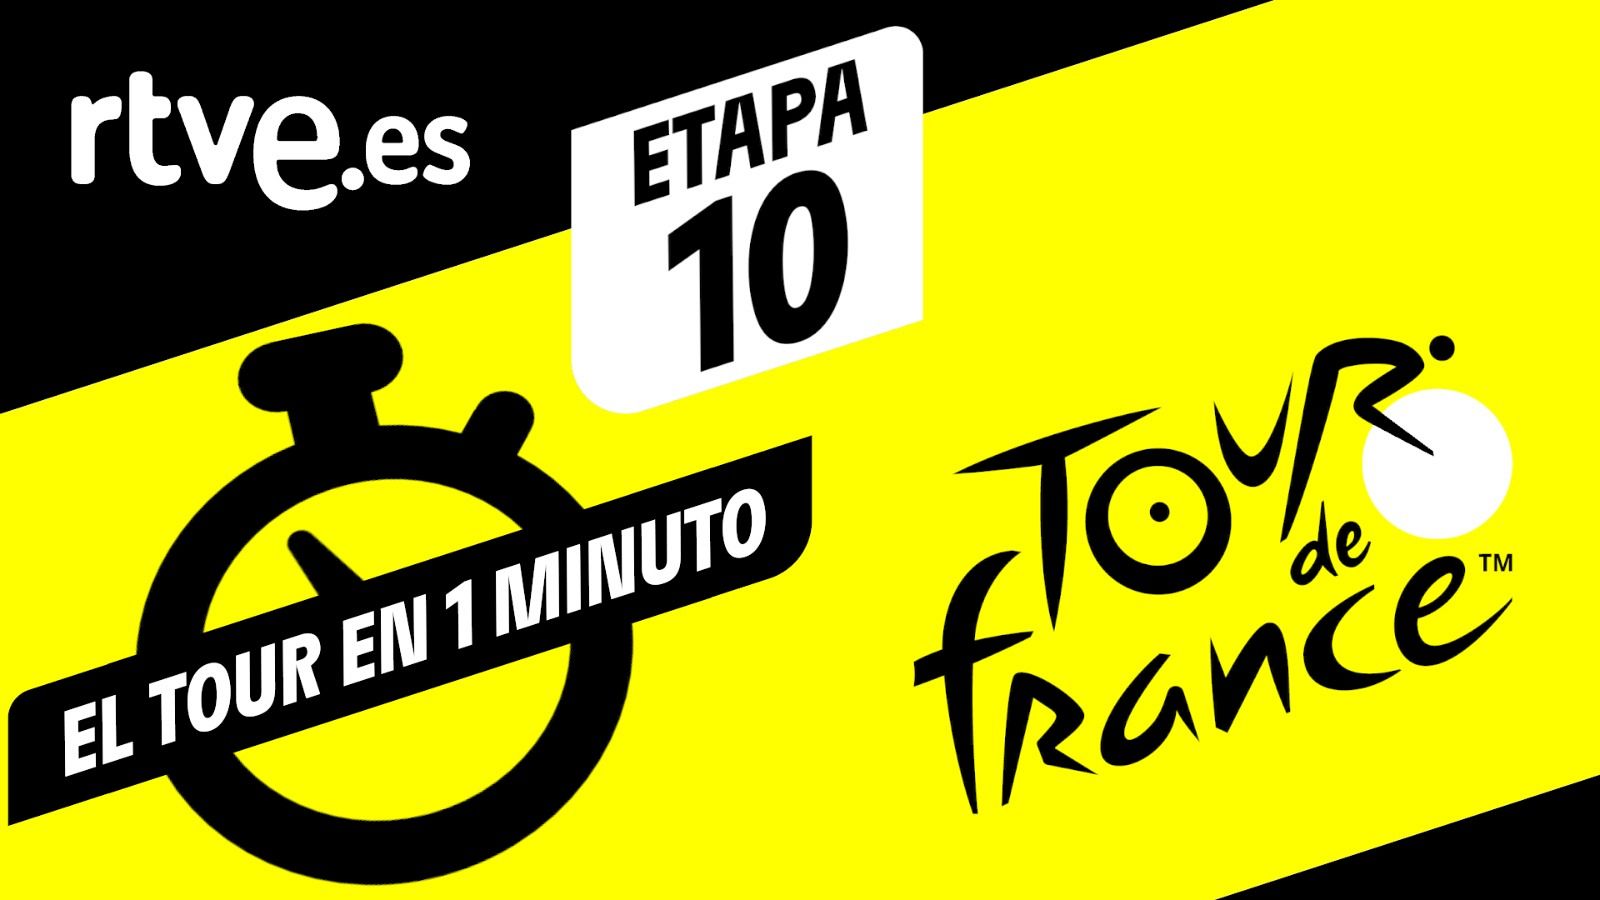 Etapa 1 Tour de Francia 2020 | #ElTourEnUnMinuto